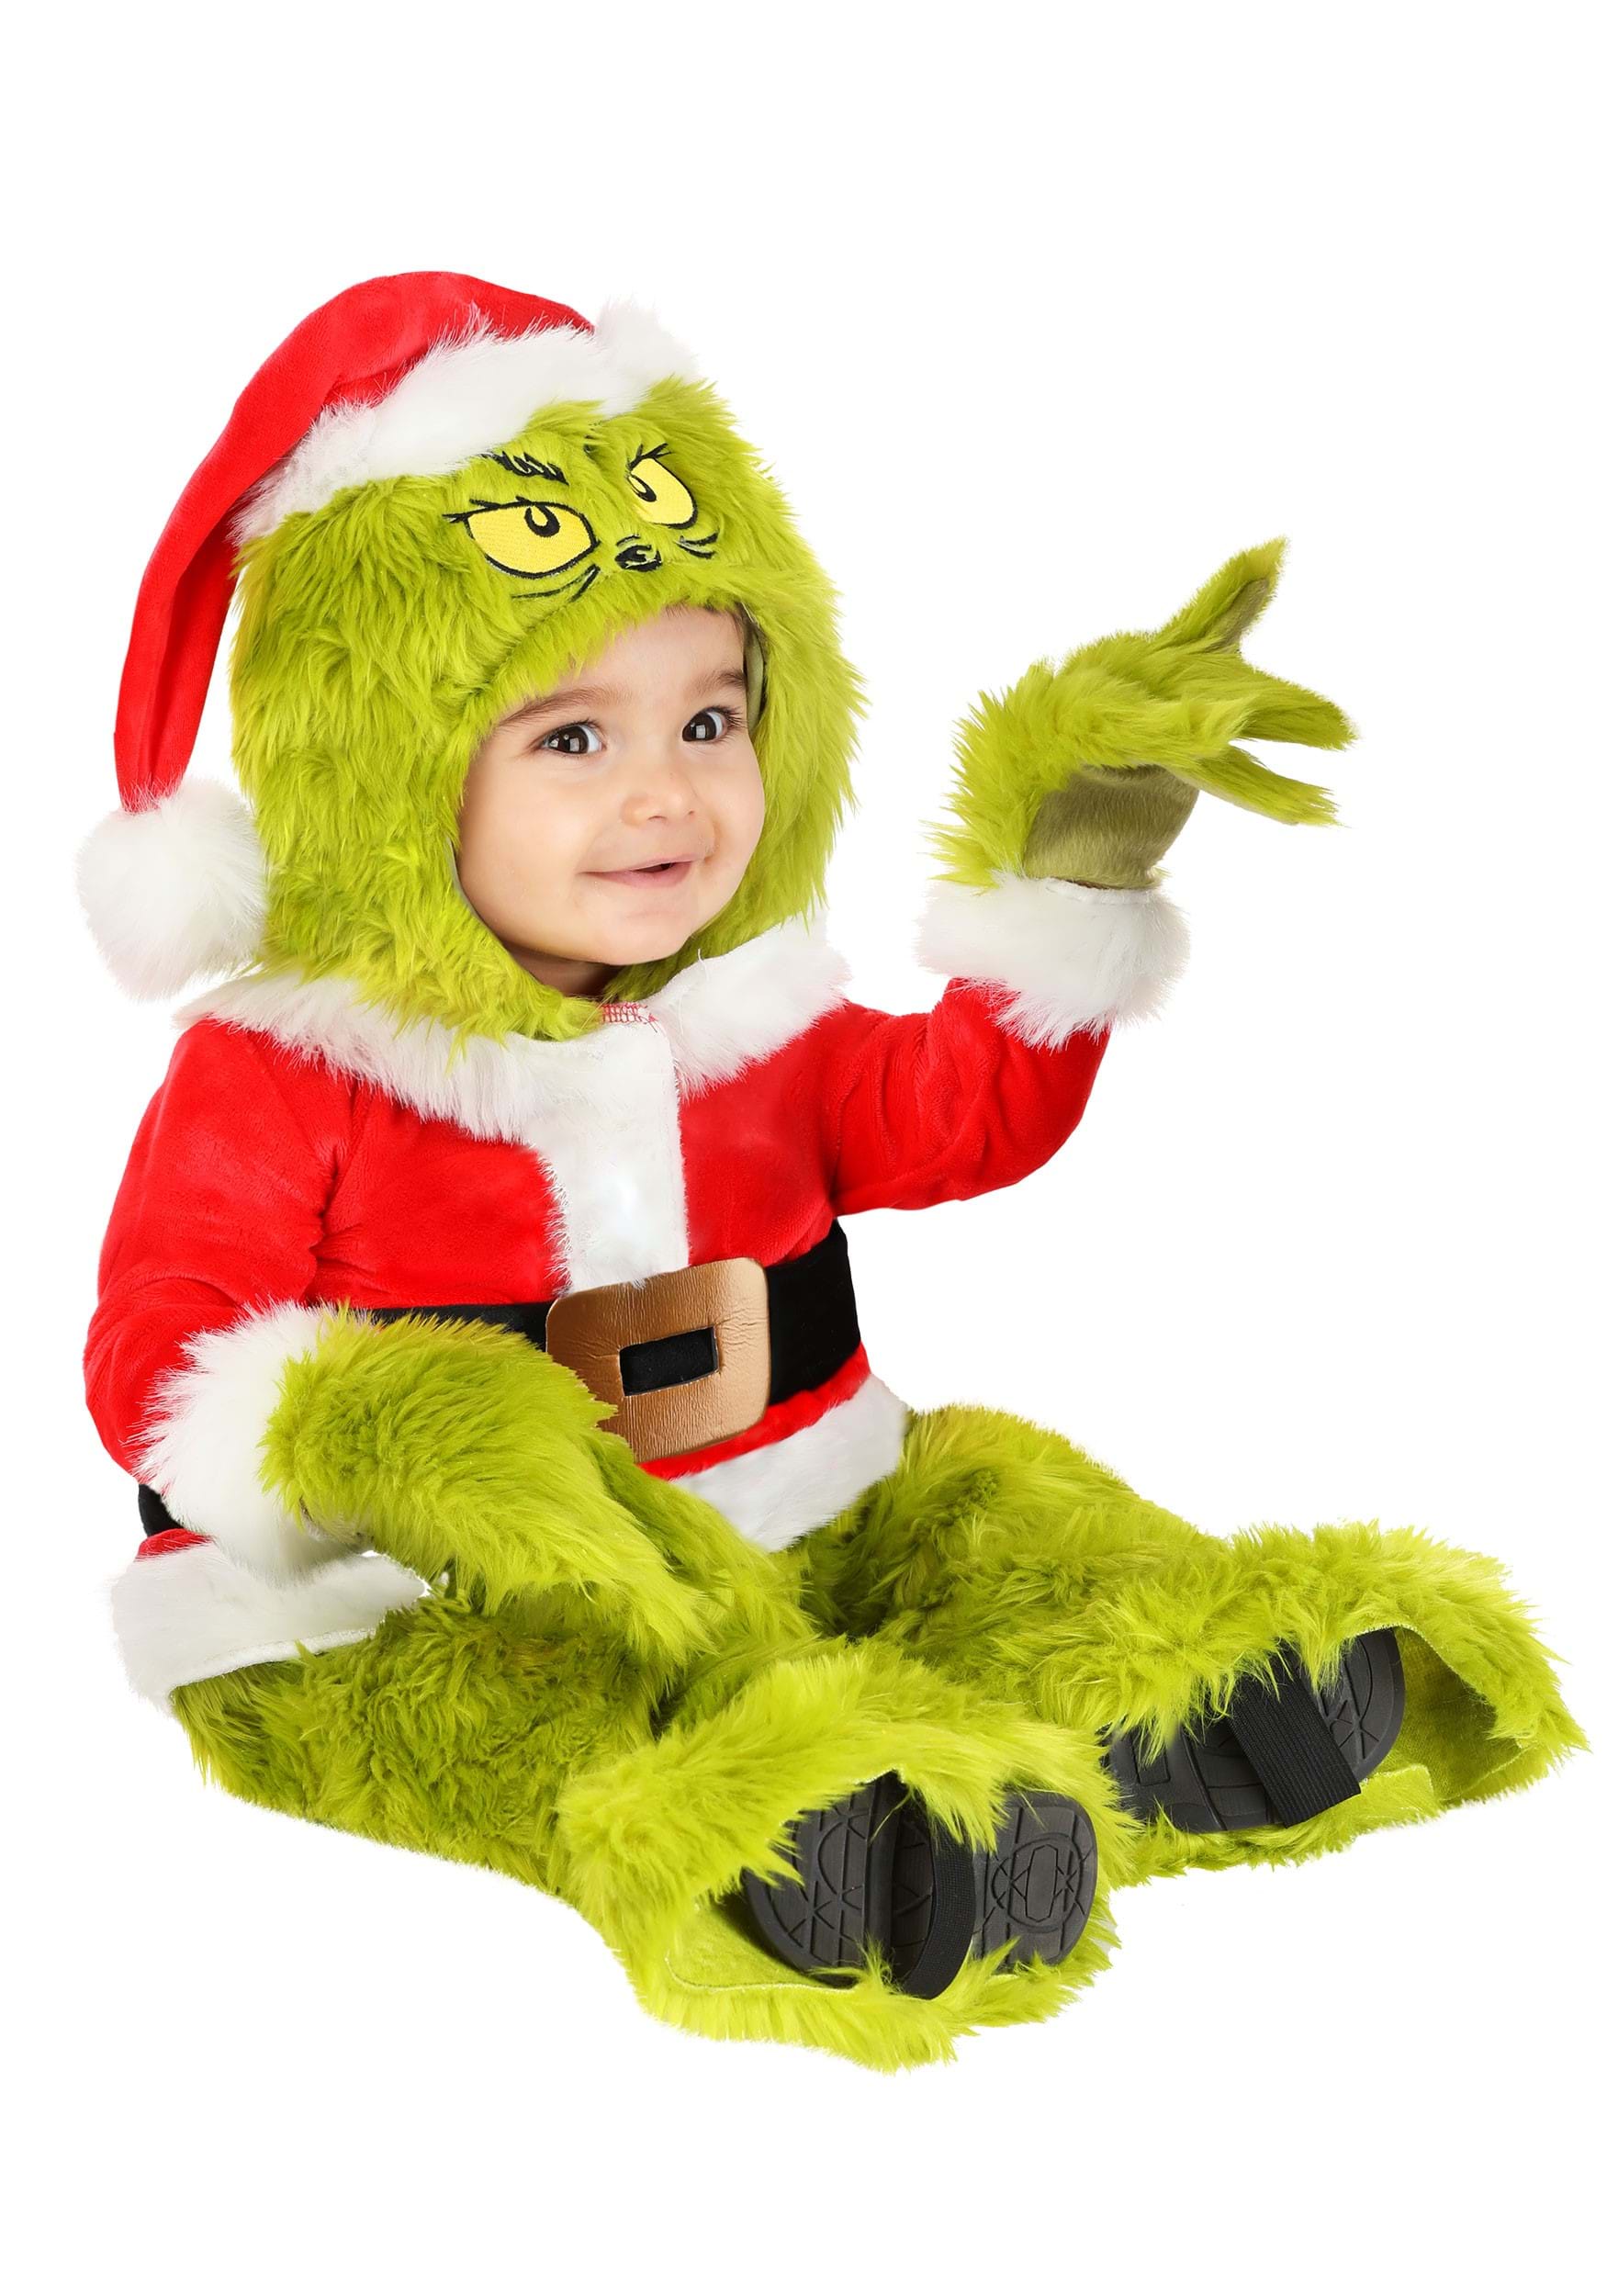 Grinch Santa Claus Costume for Infants